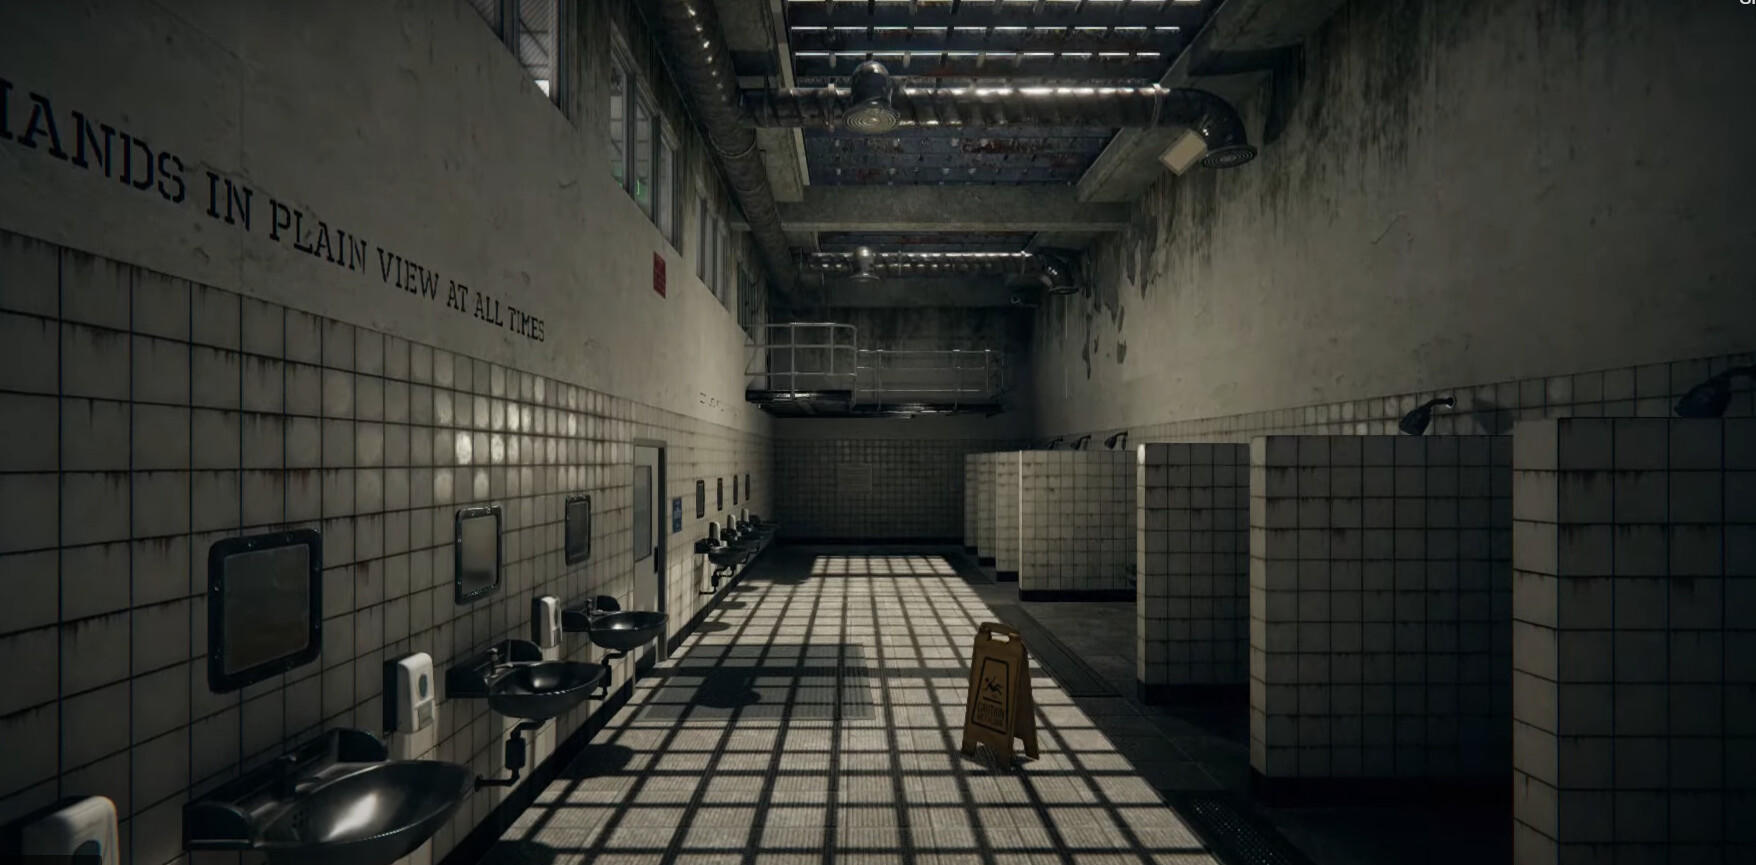 Screenshot of Jail Escape Plan VR